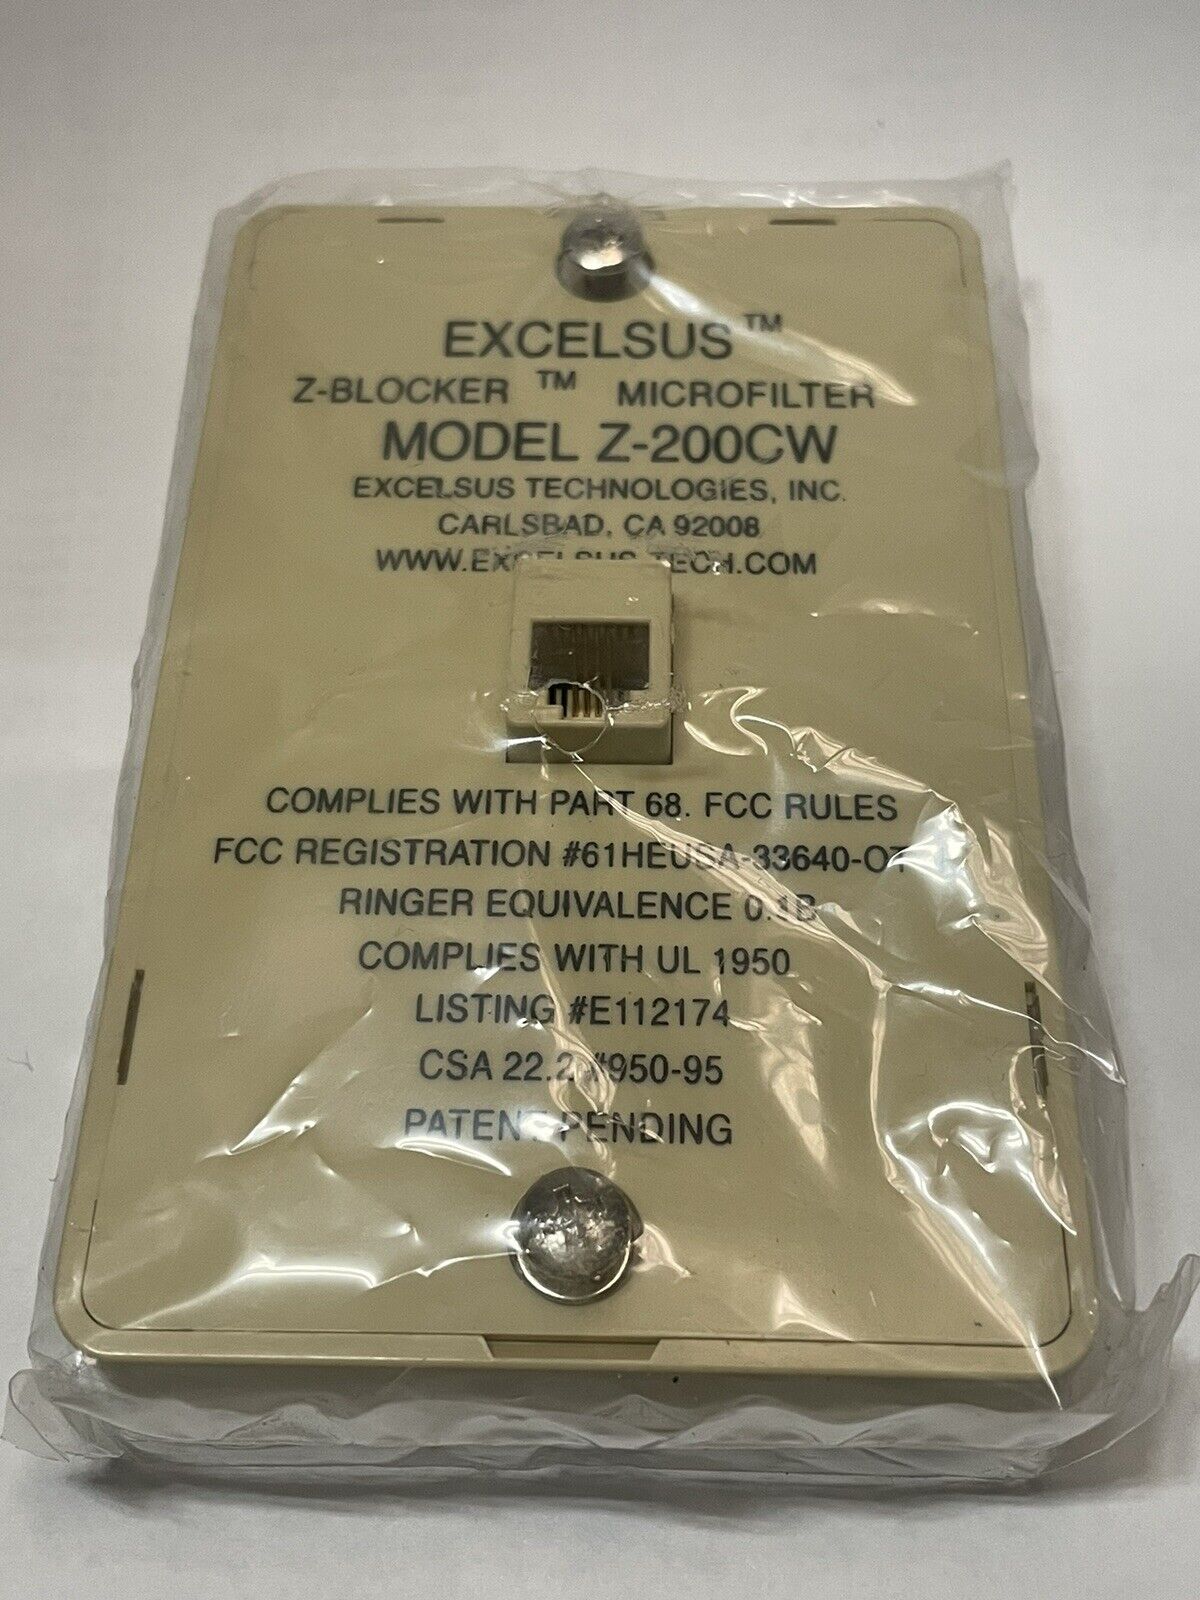 Excelsus Technologies Z-Blocker Microfilter Model Z-200CW DSL Filter New Sealed 